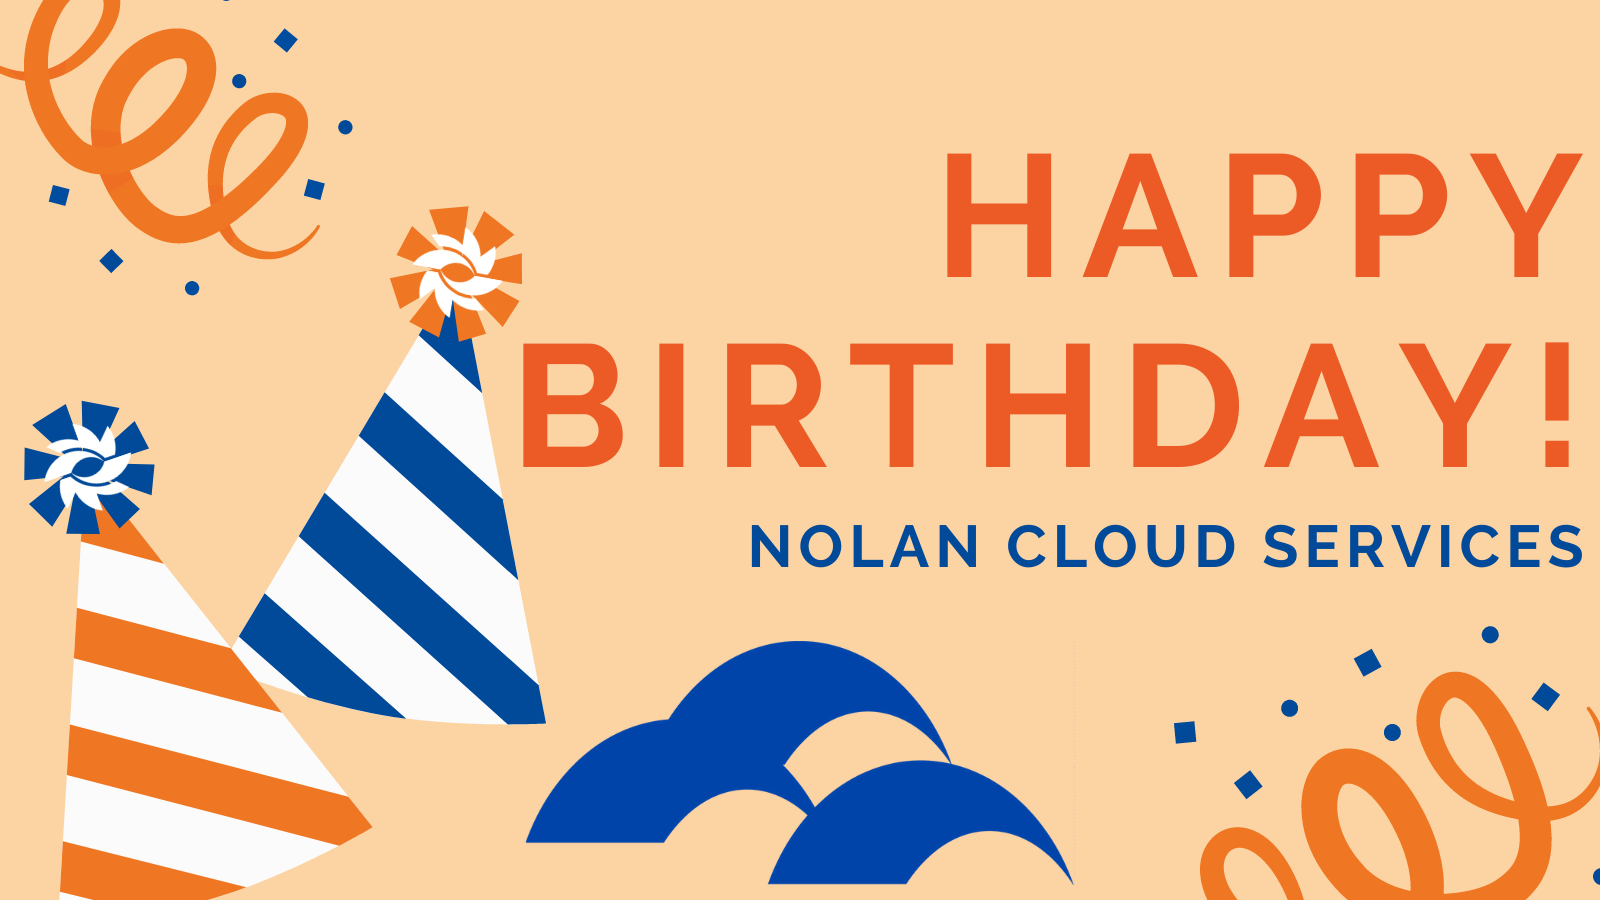 Happy second birthday to Nolan Cloud Services!